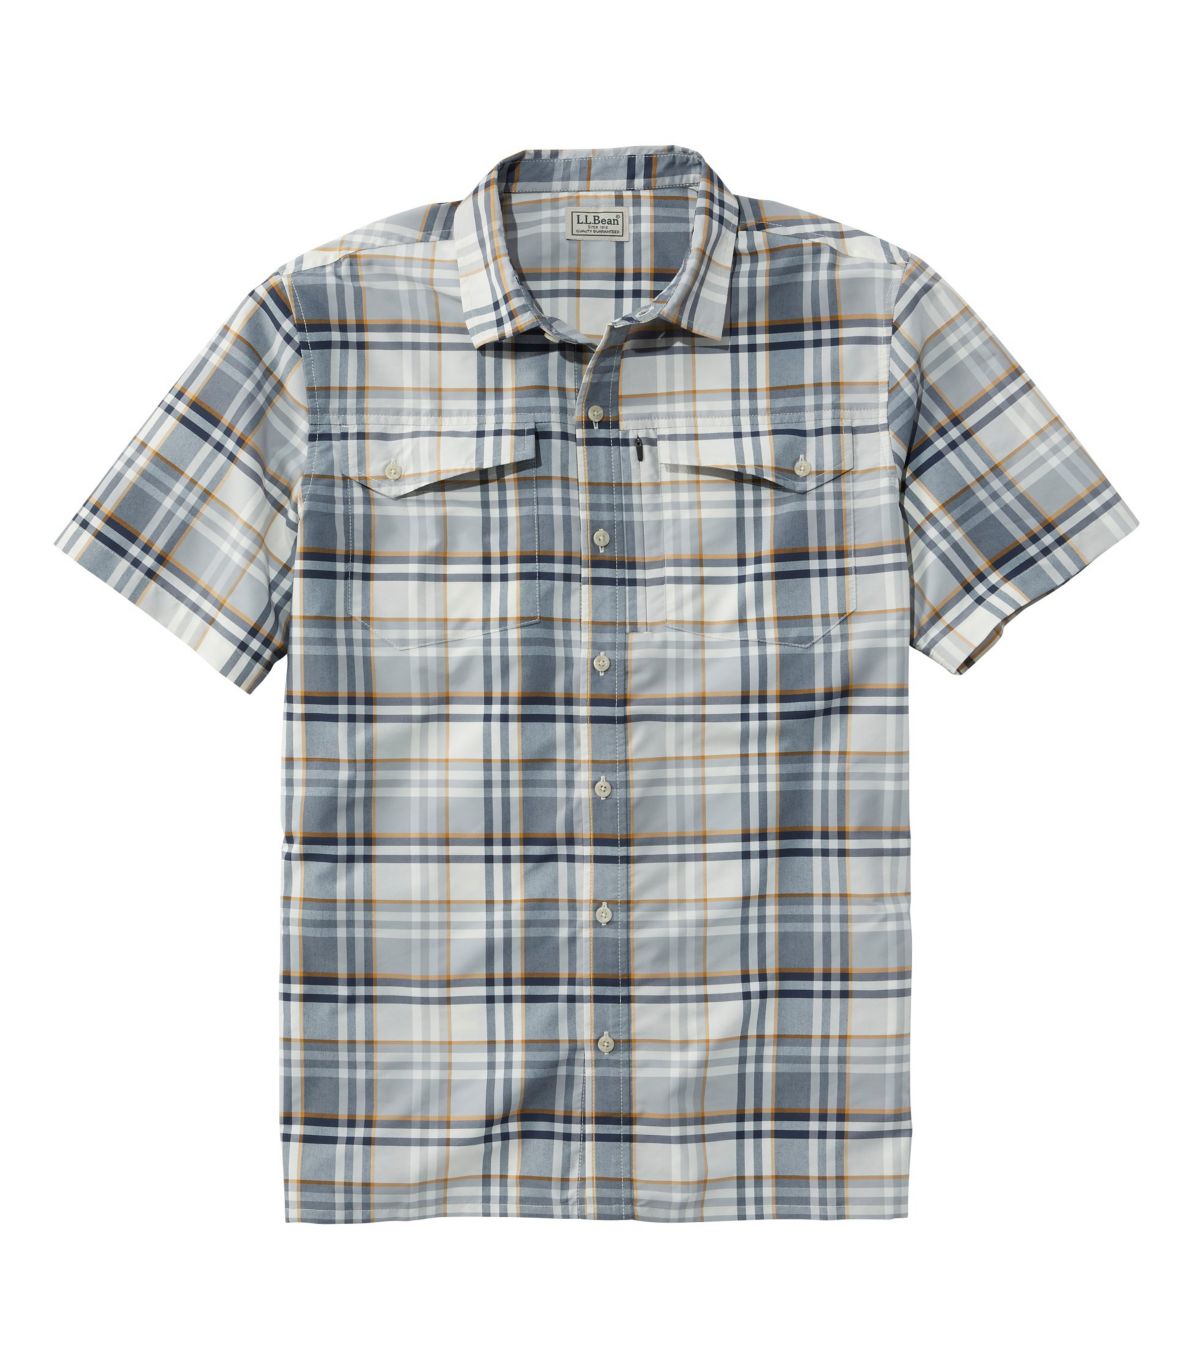 Men's SunSmart™ Cool Weave Shirt Short-Sleeve